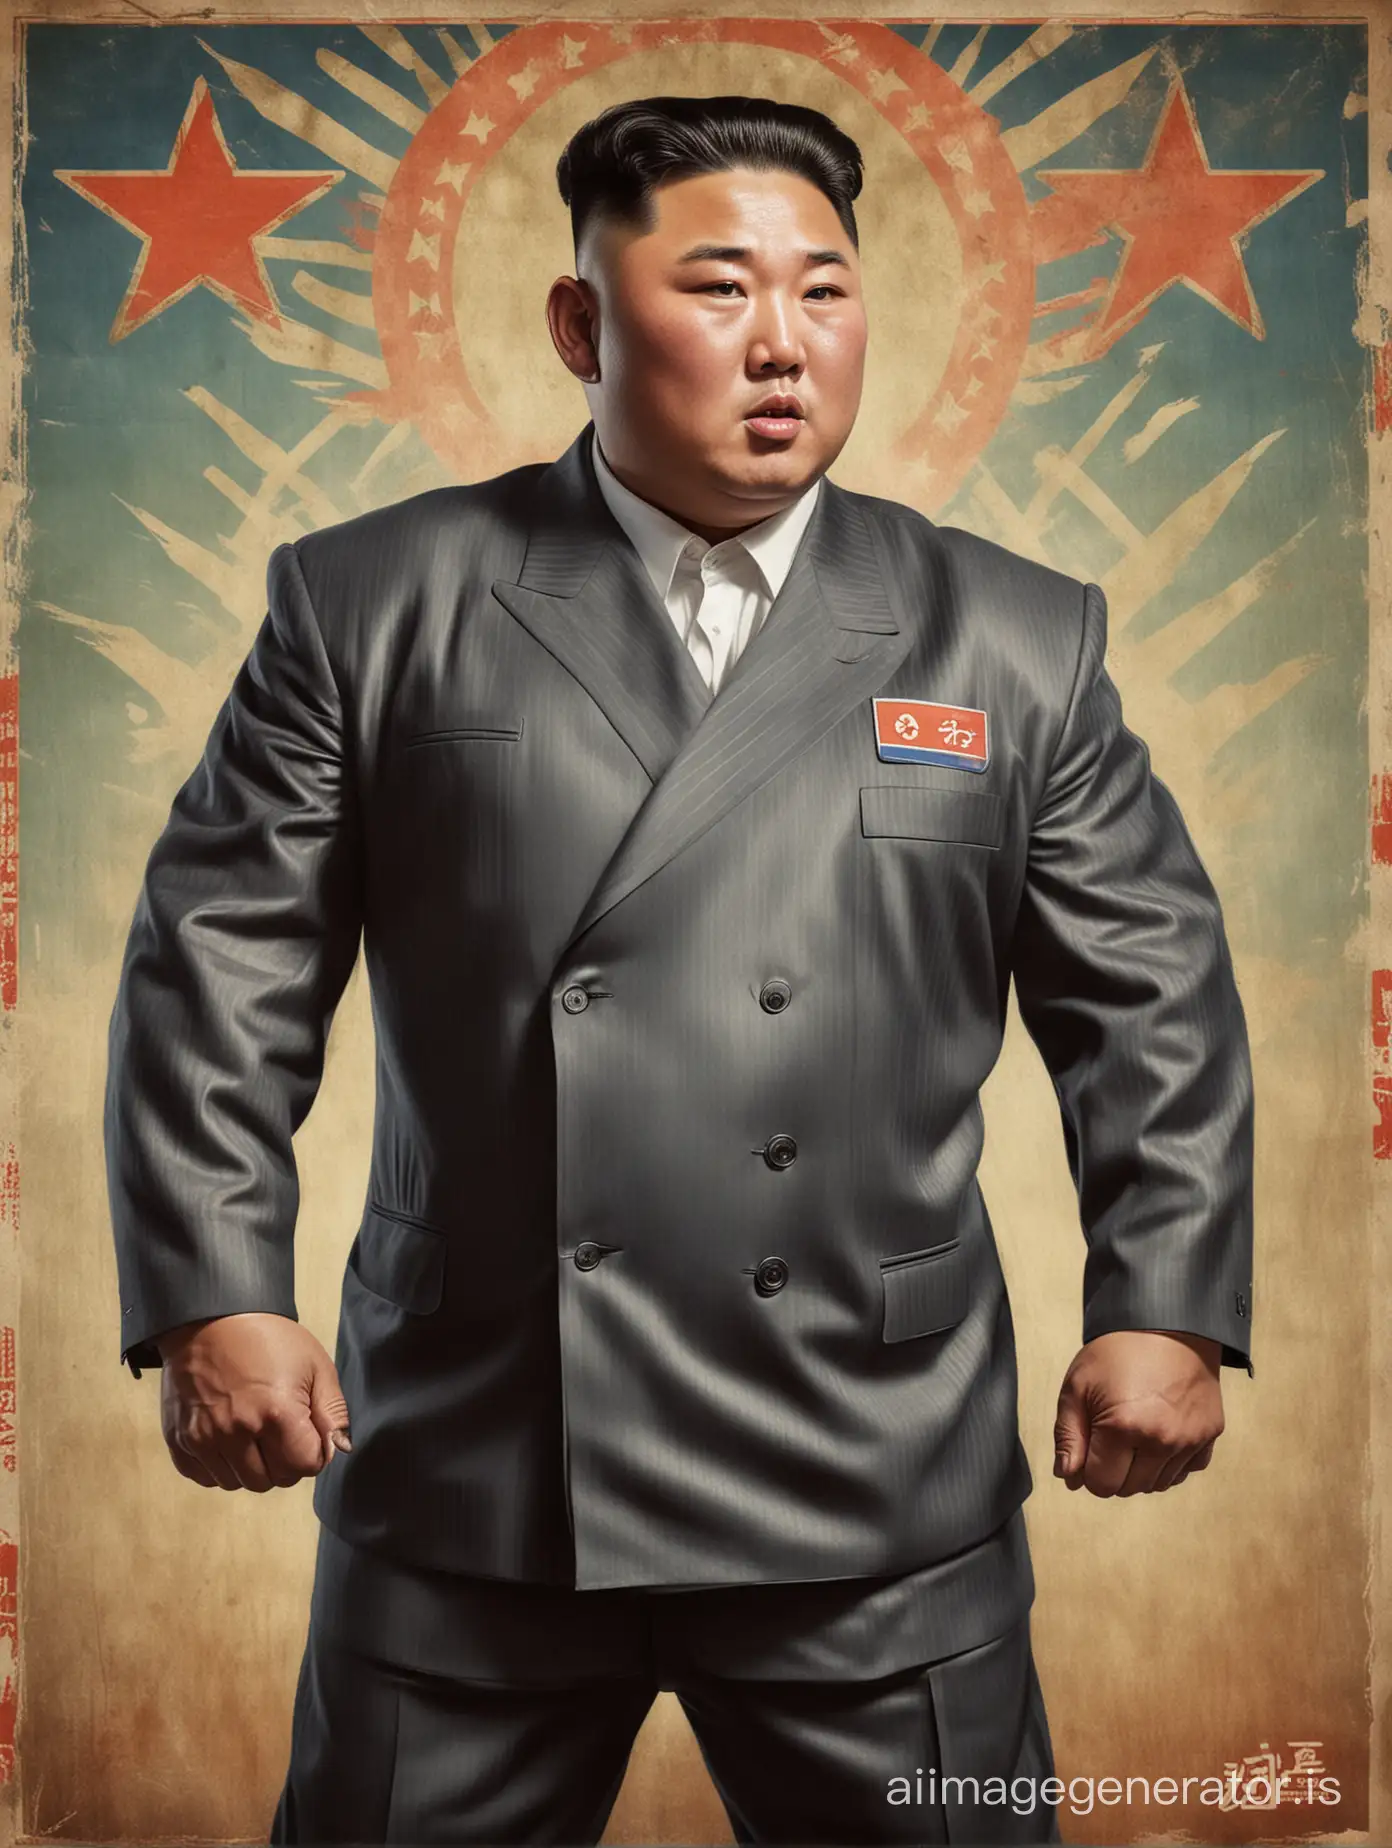 Kim-Jong-Un-Powerlifting-Bodybuilder-Vintage-North-Korean-Propaganda-Style-Portrait